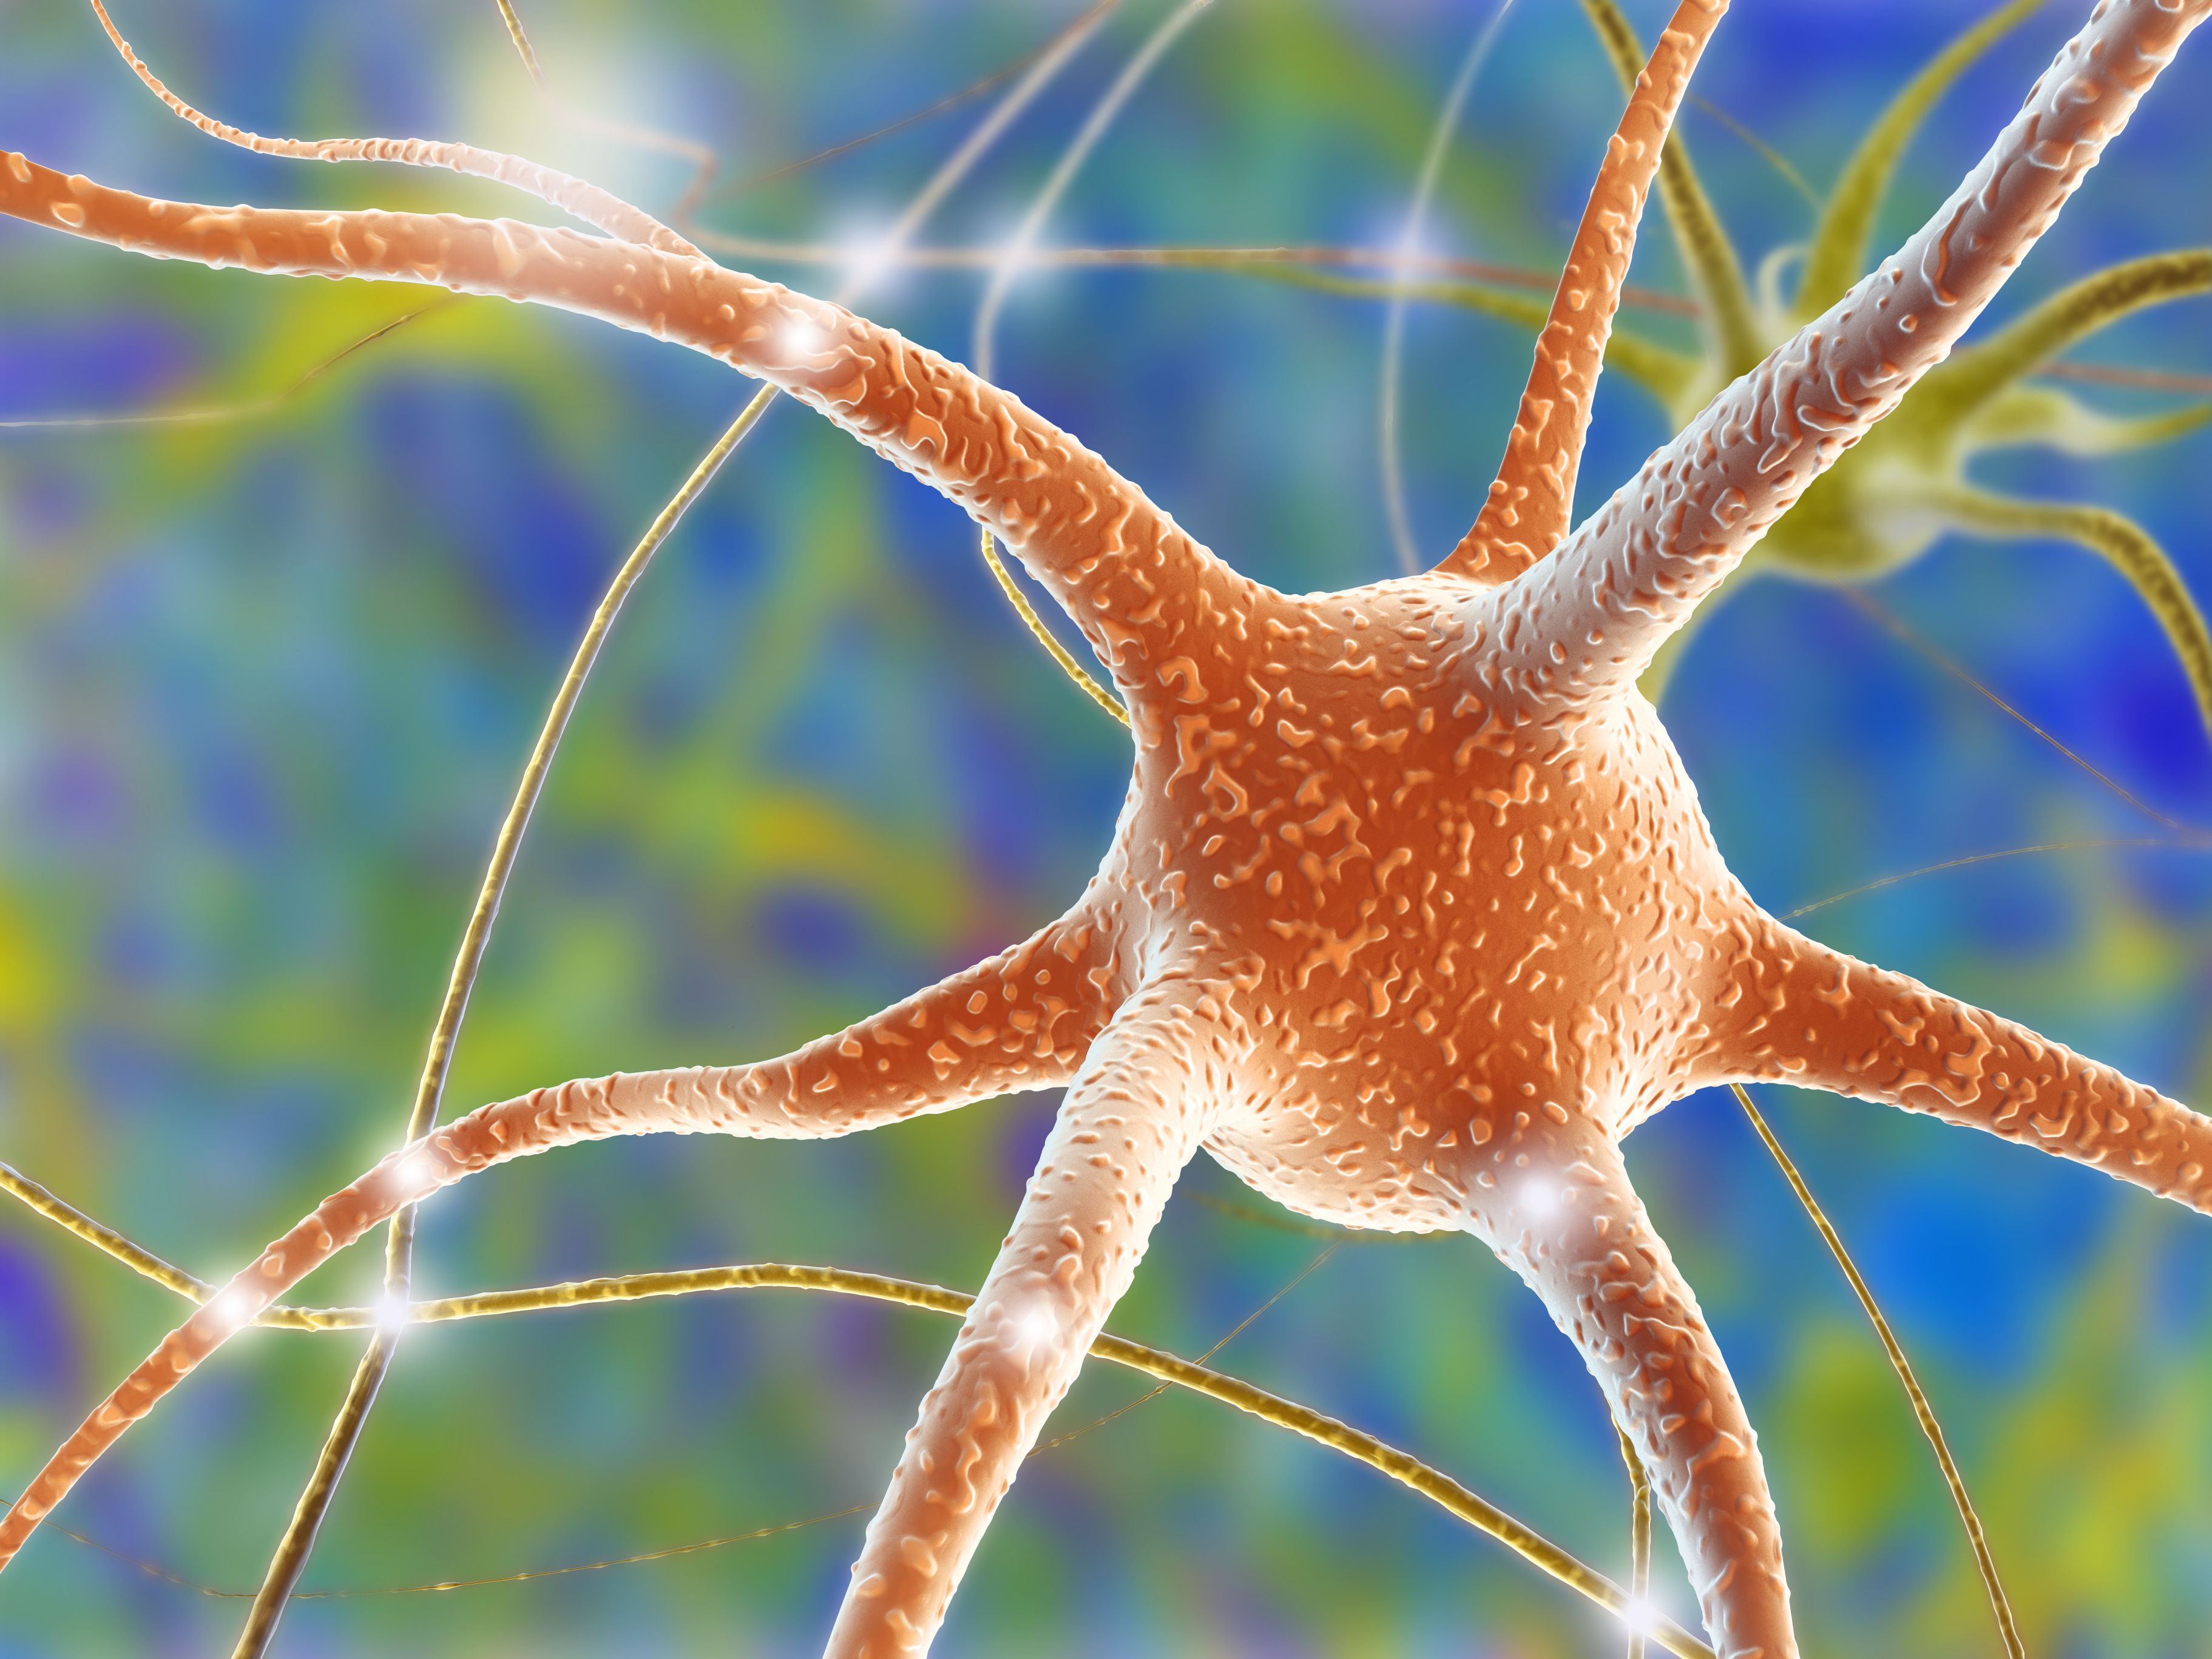 somatic nervous system manages